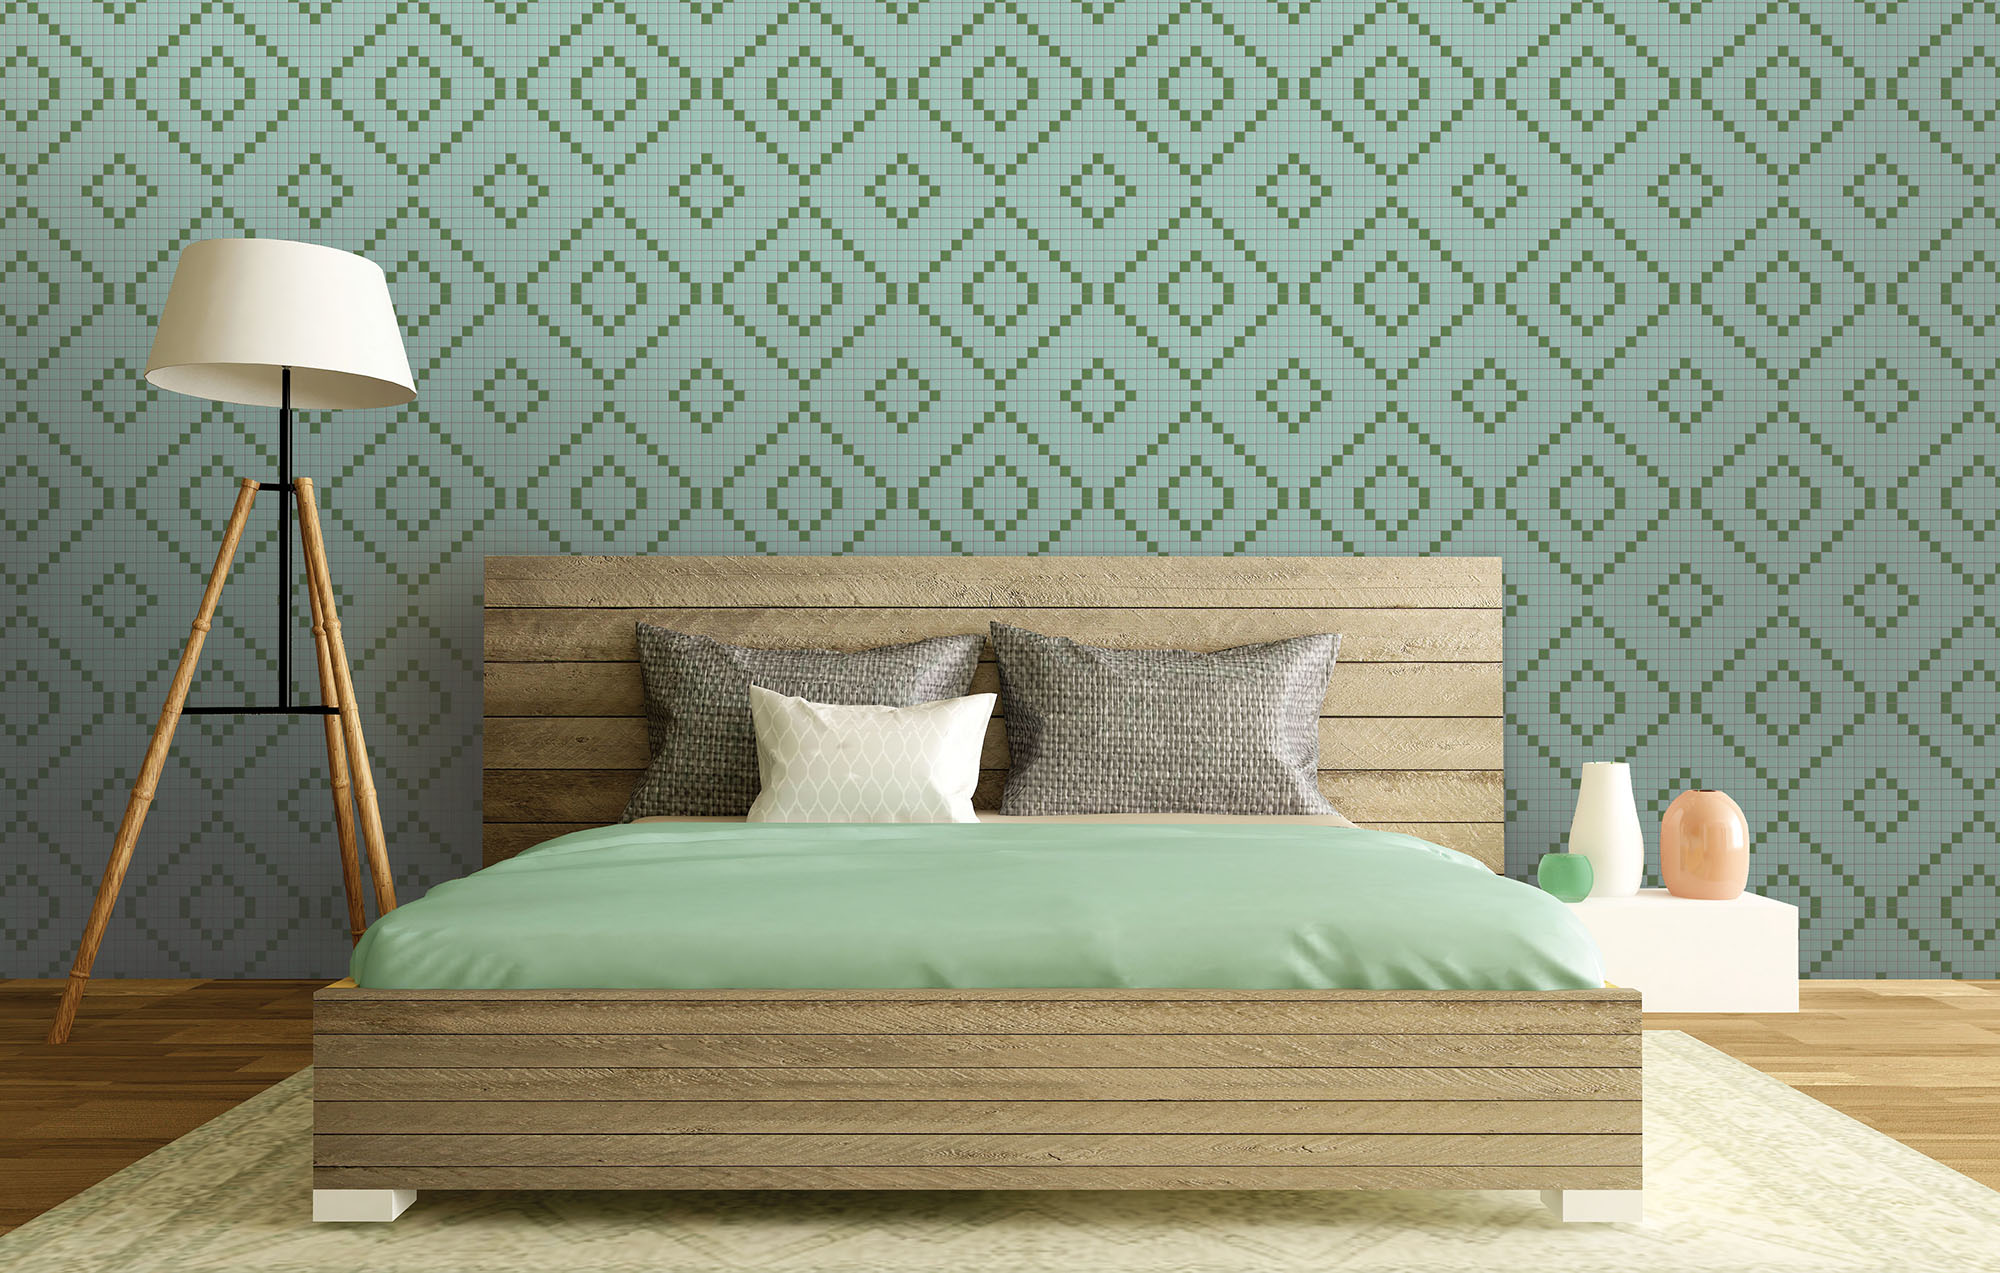 Green Repeating Tile Pattern | Diamond Saguaro By Artaic